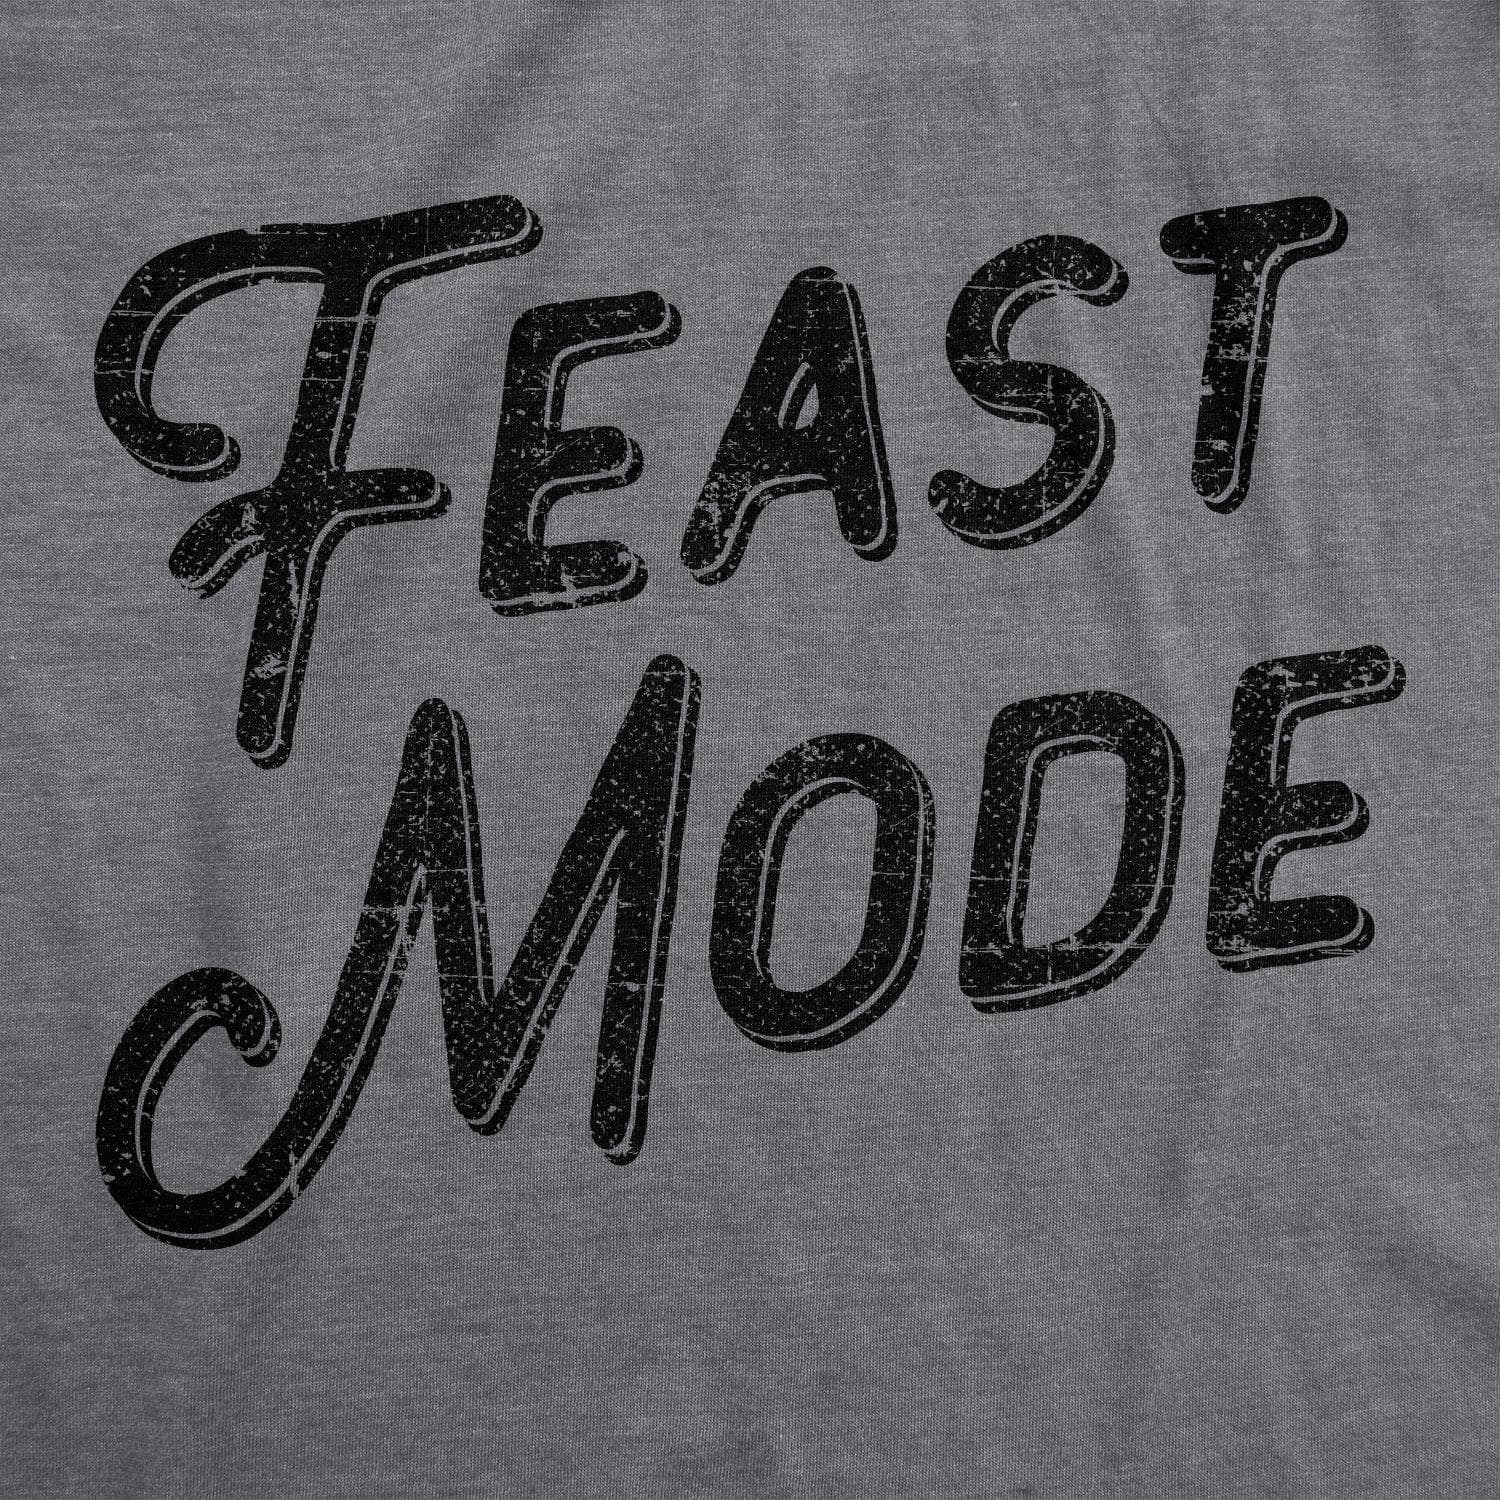 Feast Mode Men's Tshirt  -  Crazy Dog T-Shirts